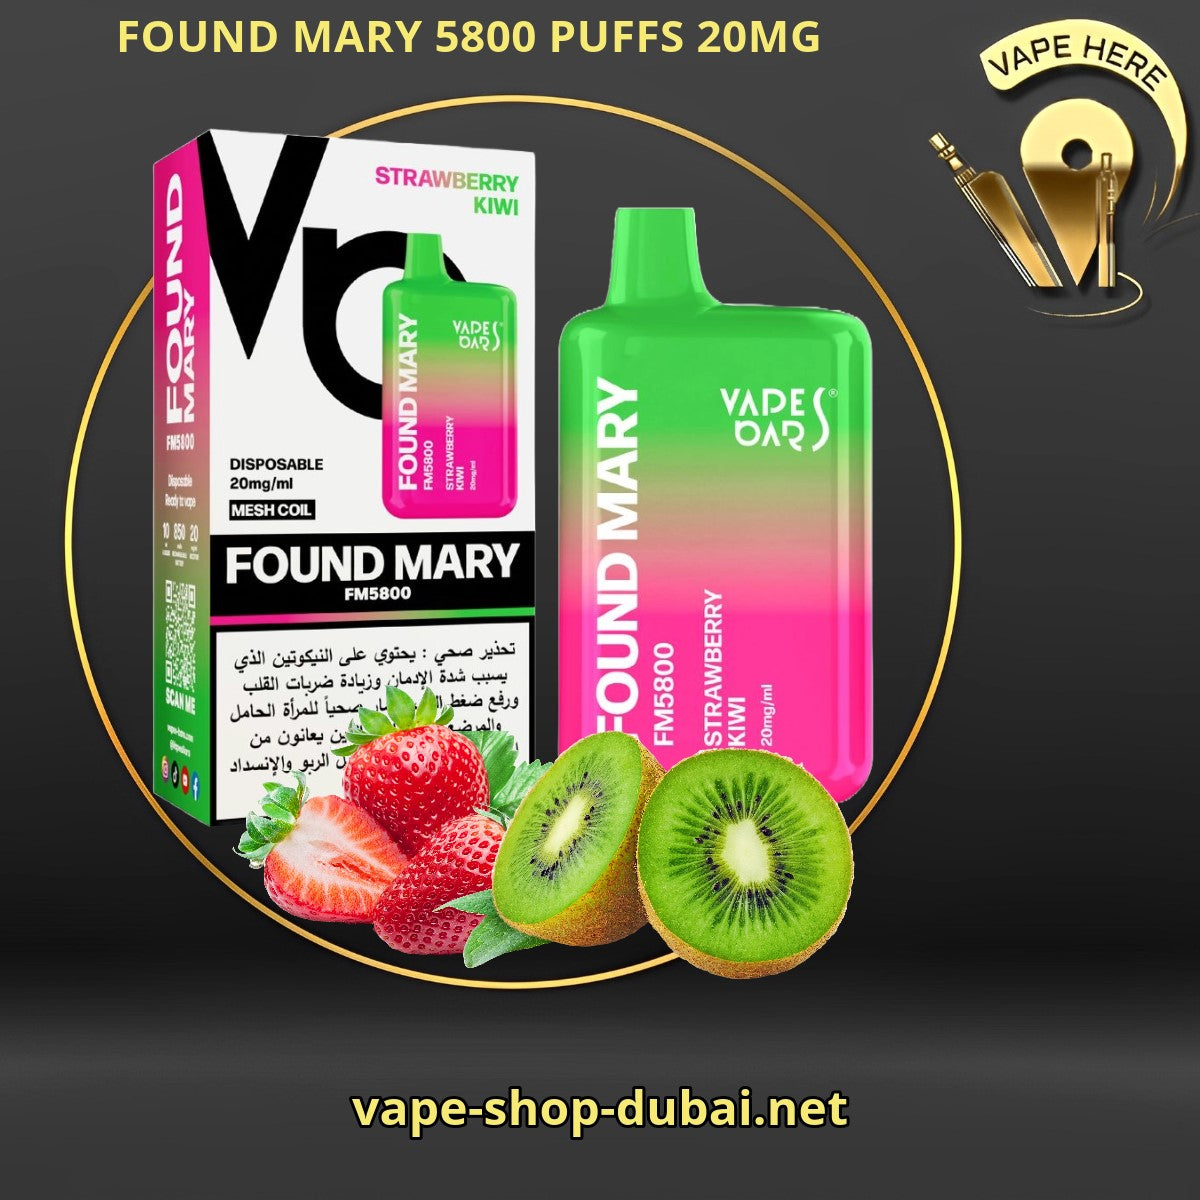 FOUND MARY FM 5800 PUFFS 20MG Strawberry Kiwi DISPOSABLE VAPE BY VAPE BARS UAE Sharjah